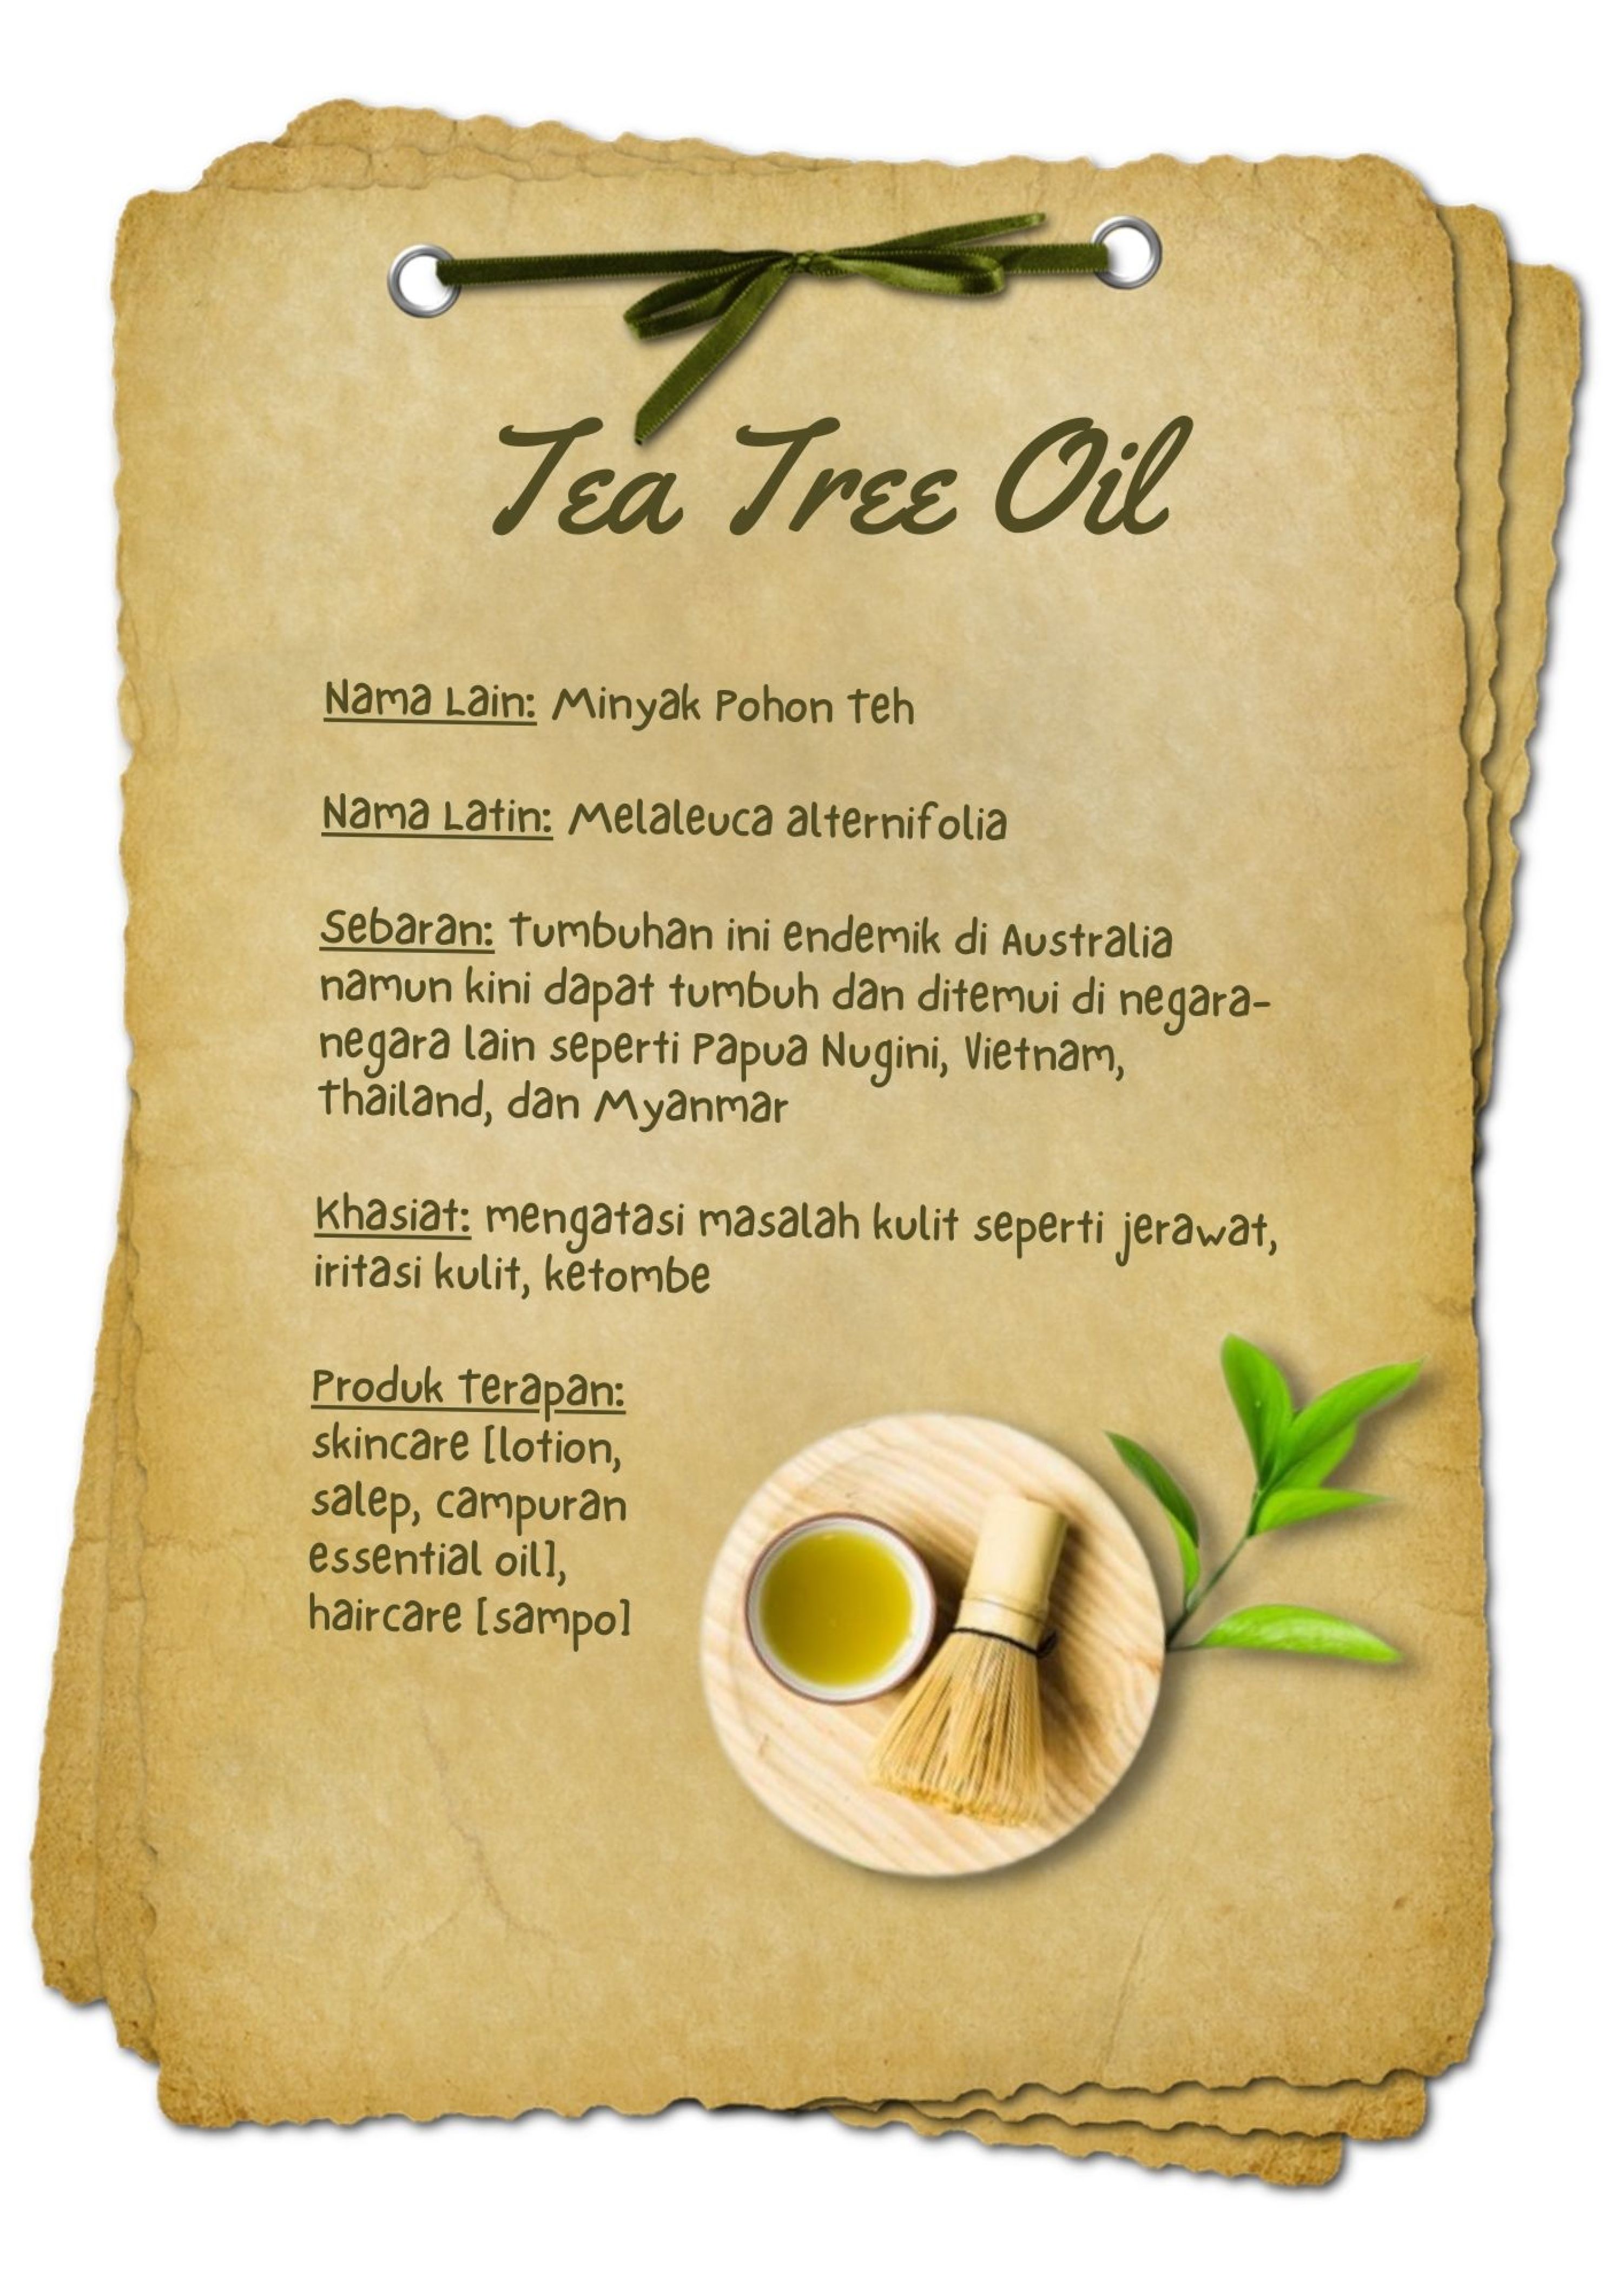 Tea Tree Oil BAHAN AKTIF.jpg